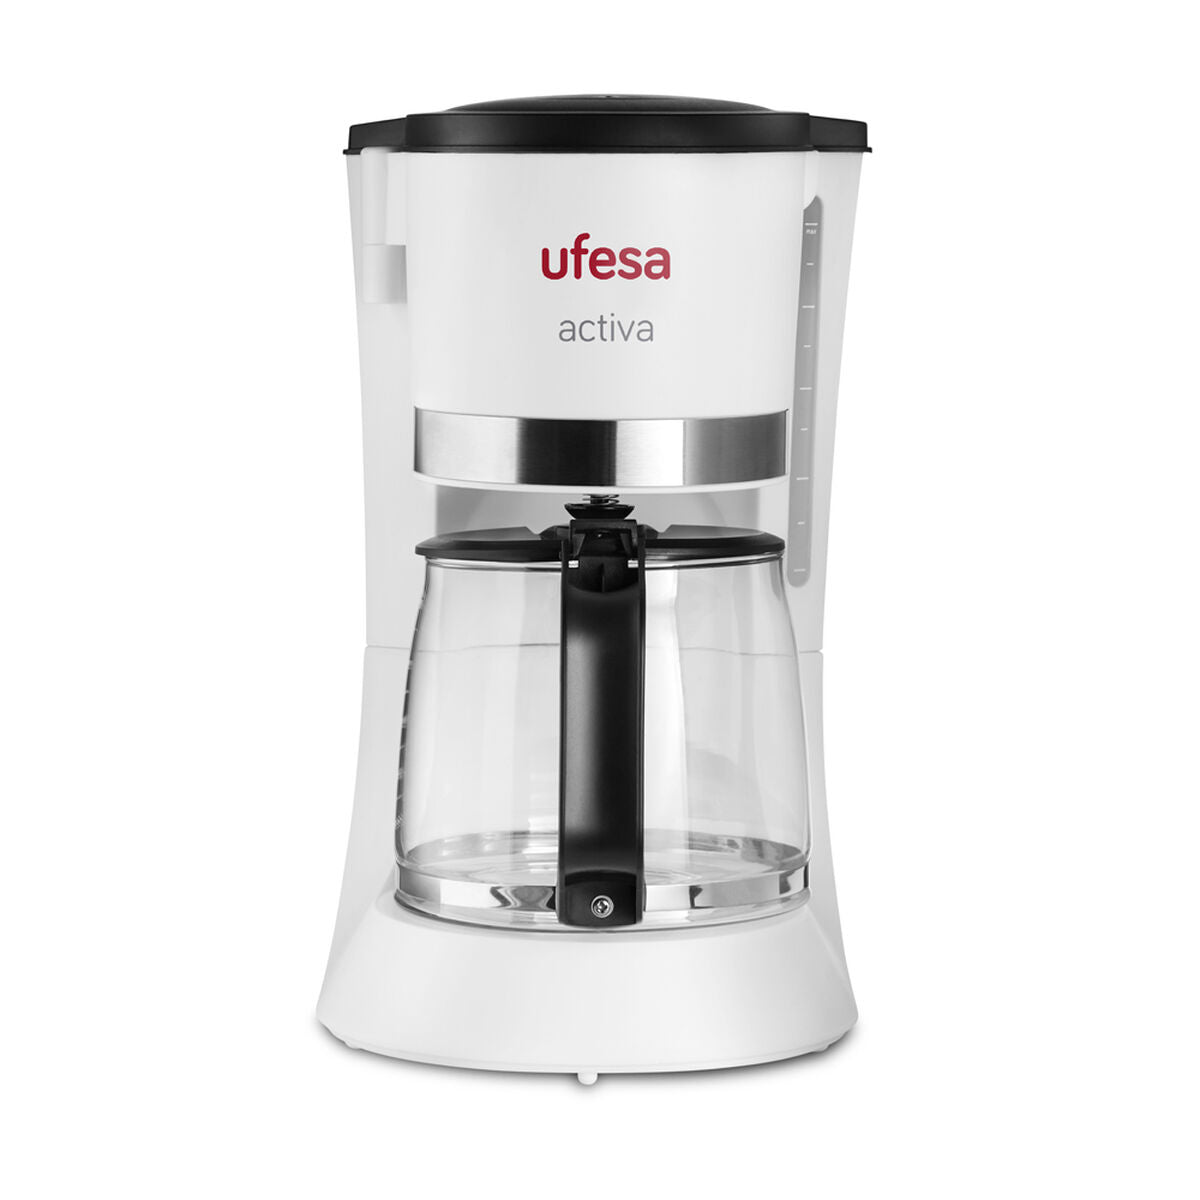 Filterkaffeemaschine UFESA CG7123 Weiß 800 W - CA International 